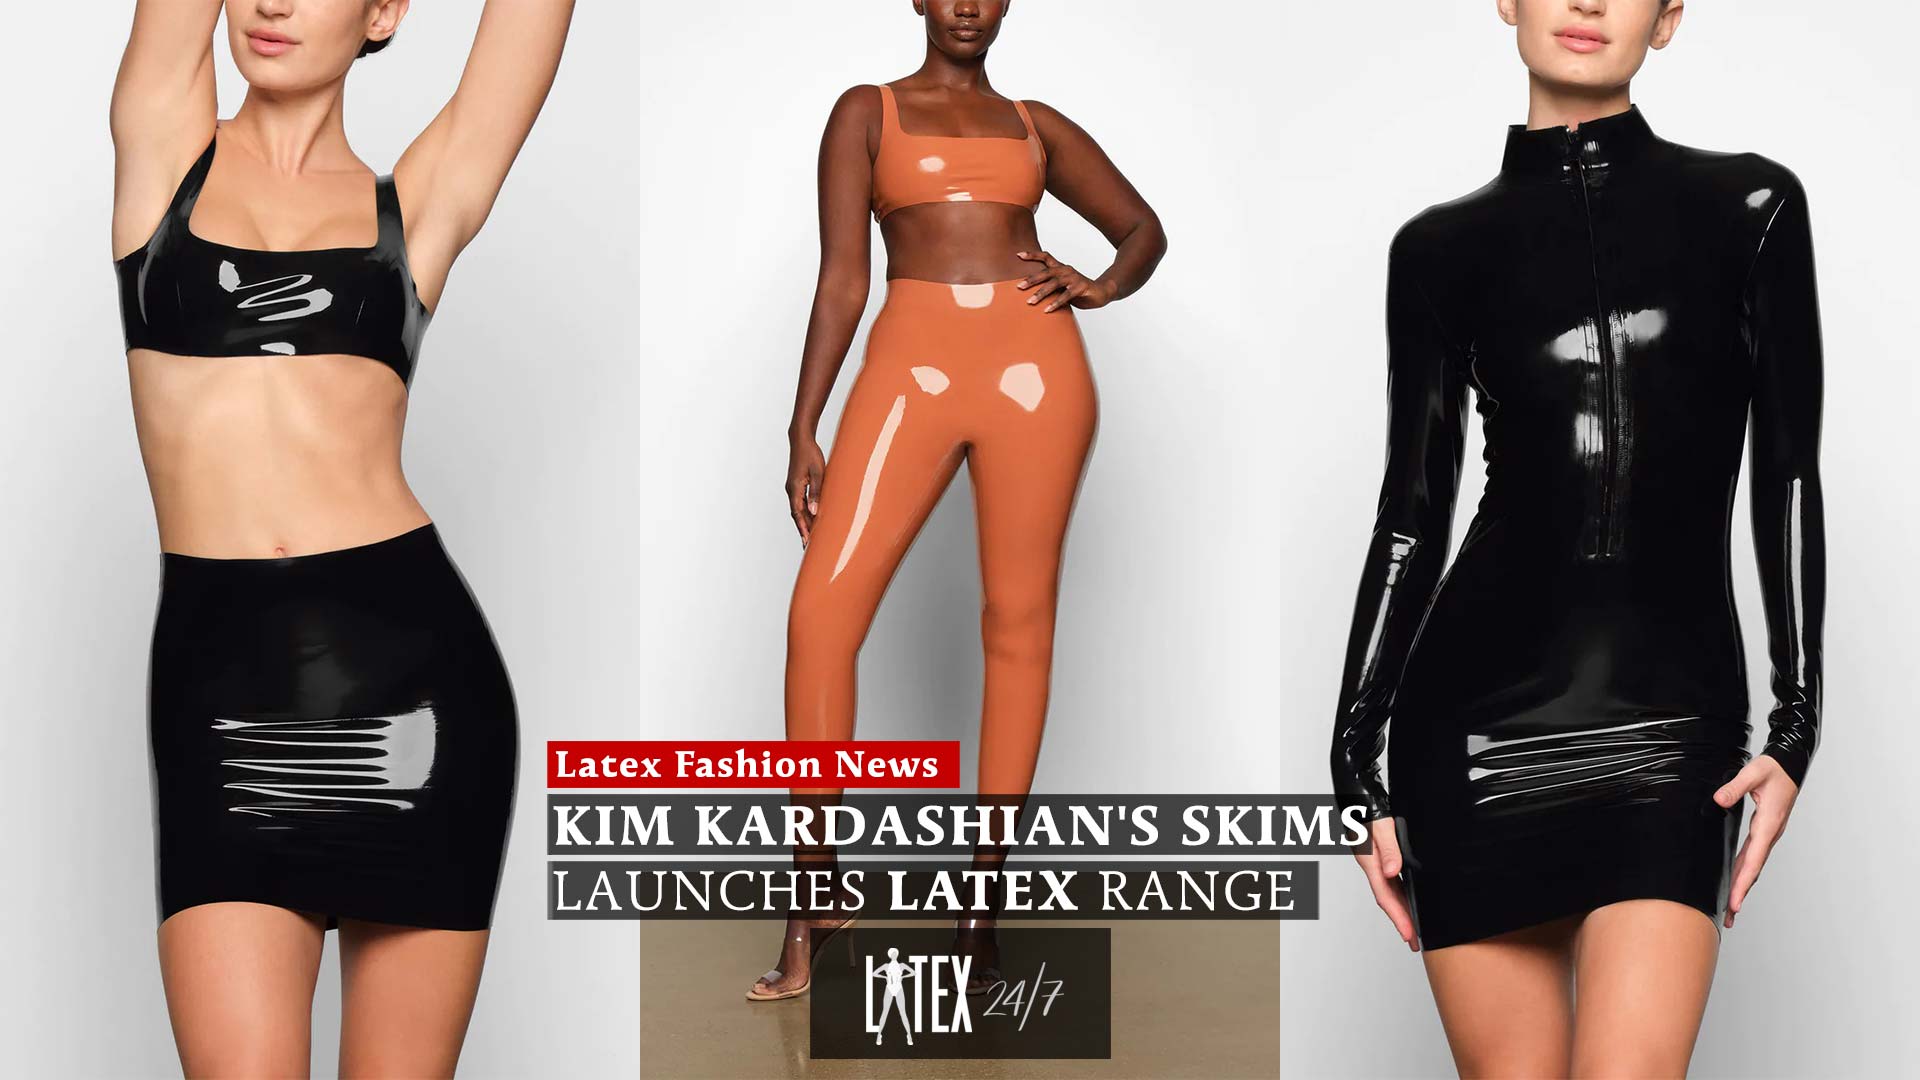 Kim Kardashian on X: COMING APRIL 27: NEW SHAPEWEAR. Get ready